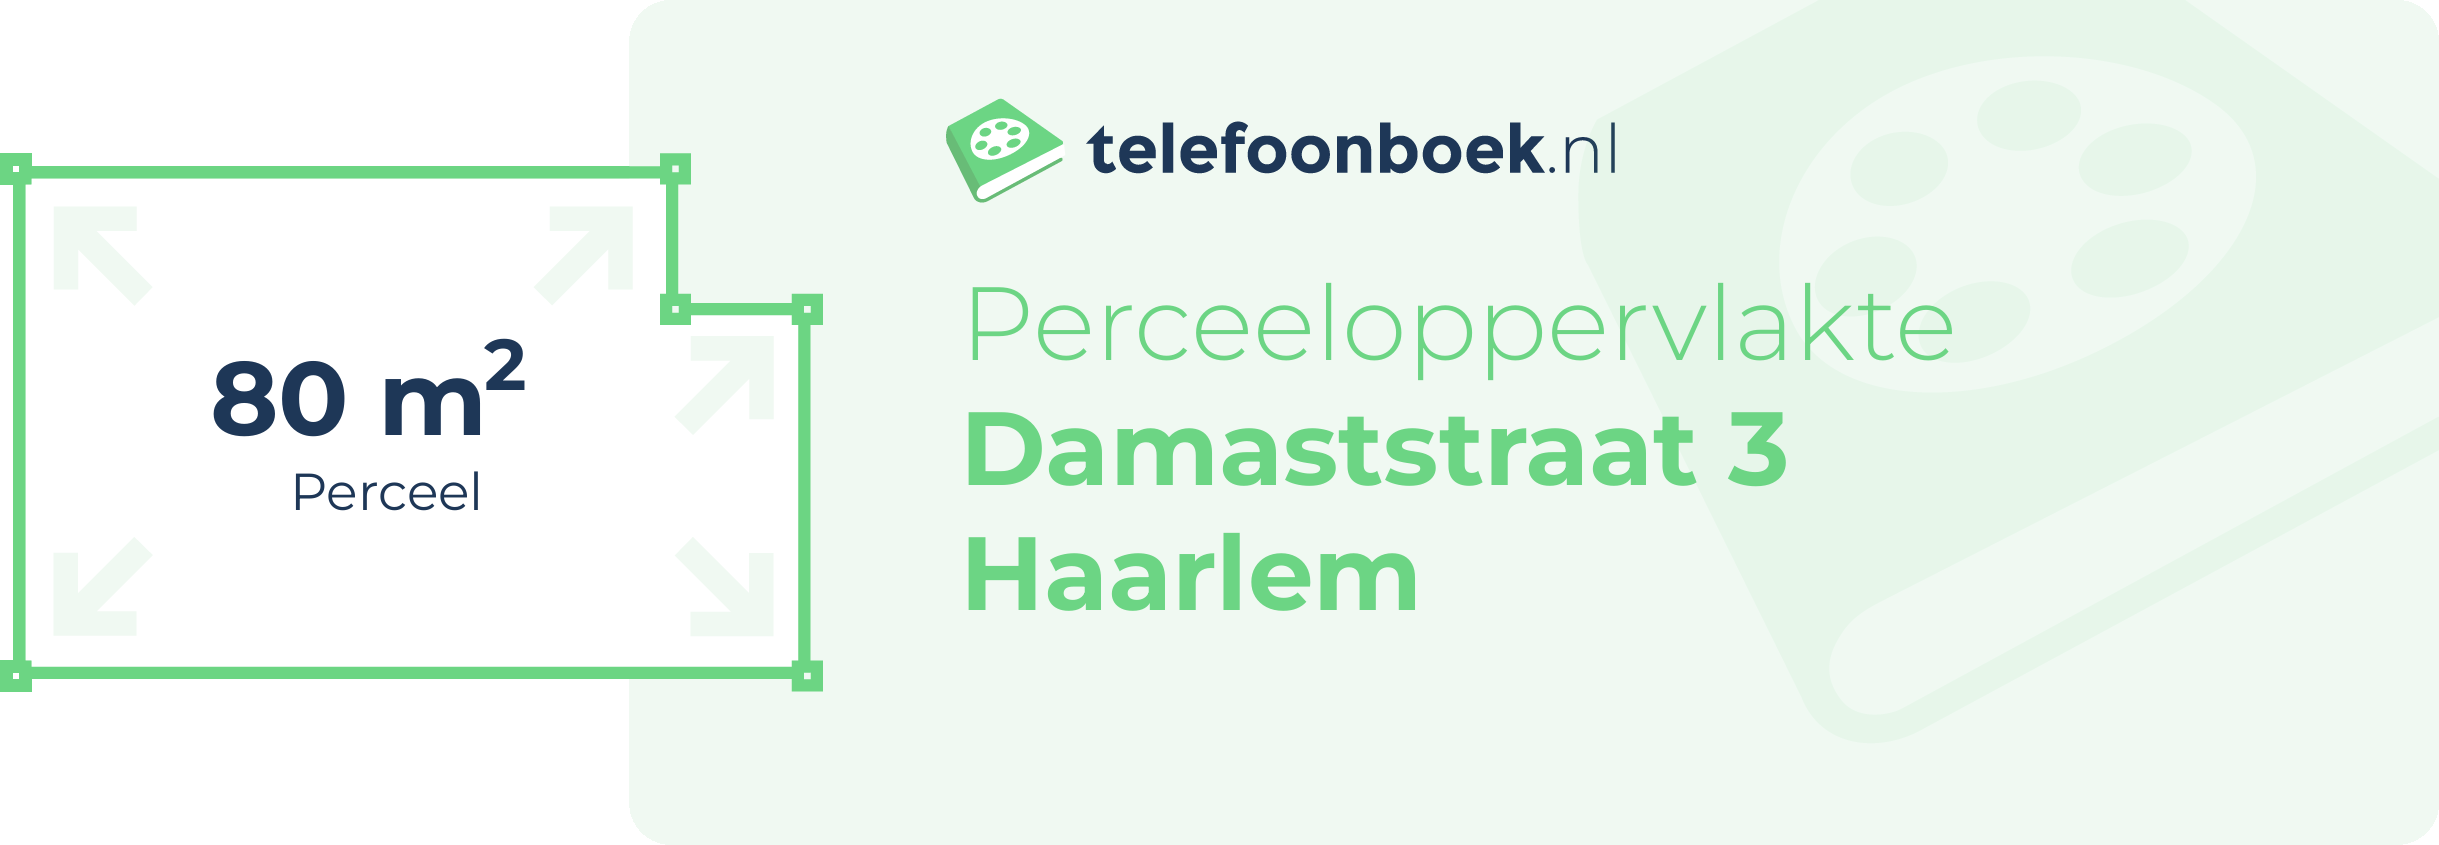 Perceeloppervlakte Damaststraat 3 Haarlem